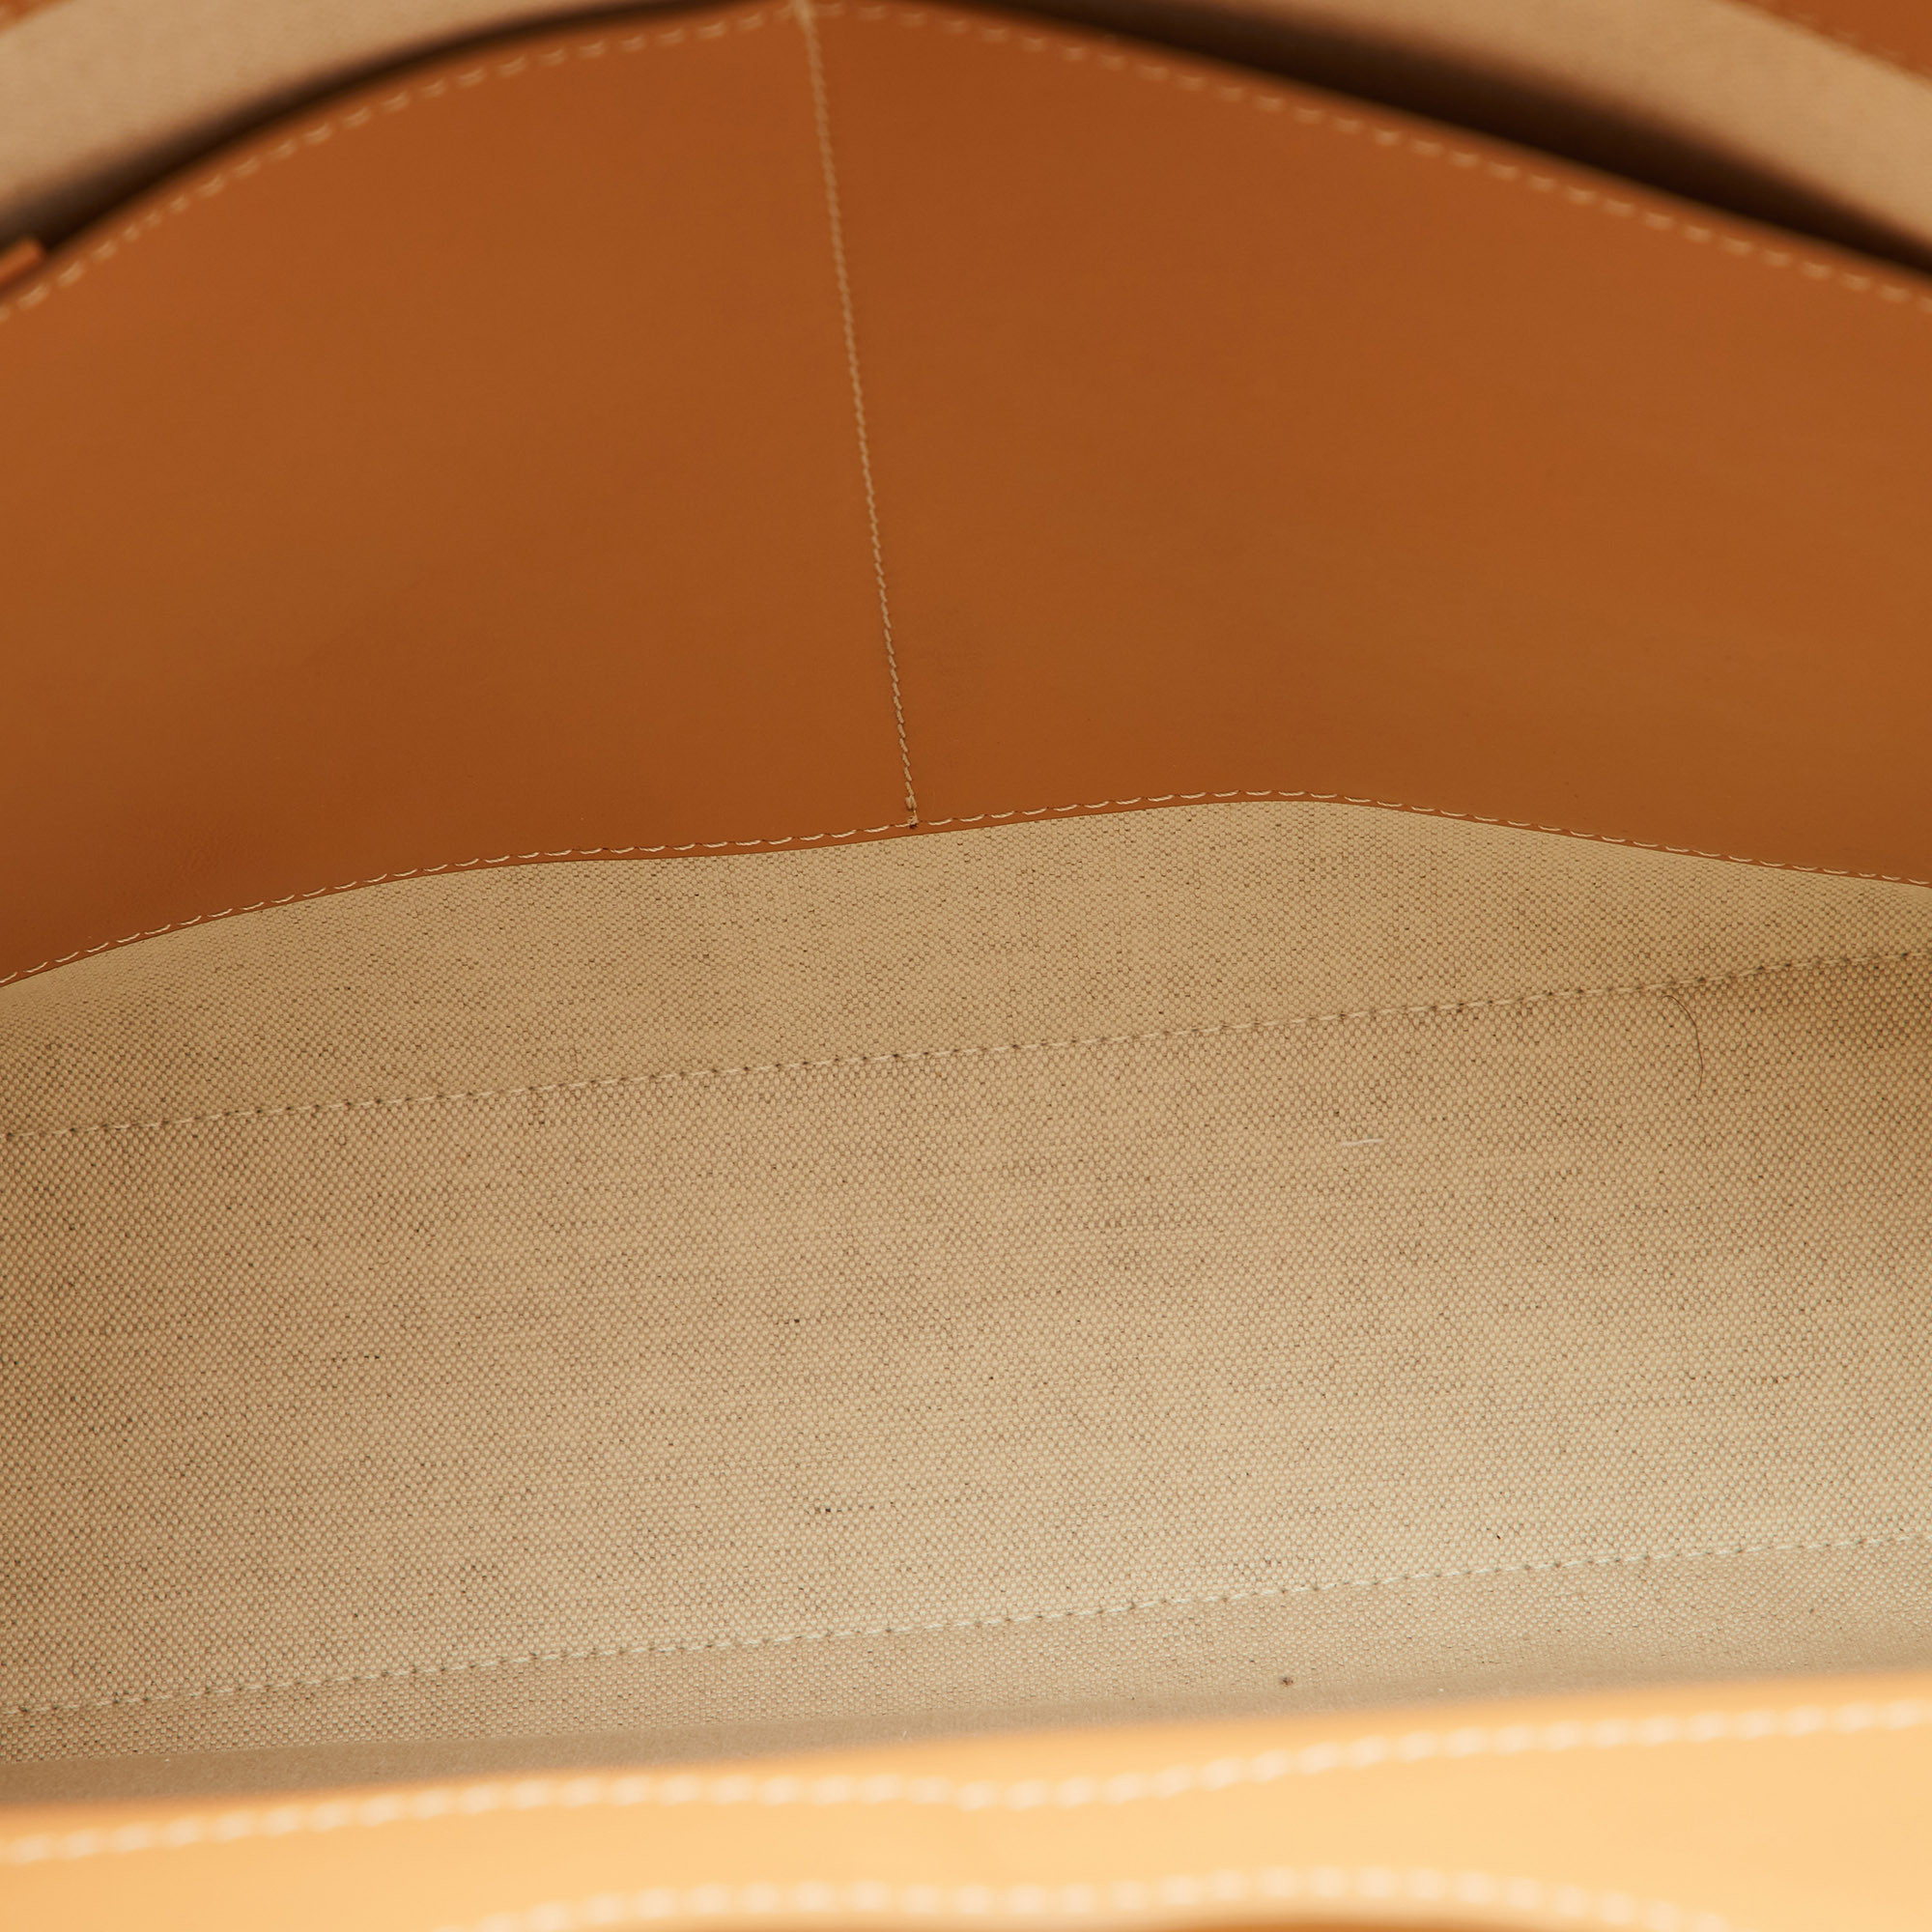 Burberry Beige Canvas And Leather Medium Pocket Bag